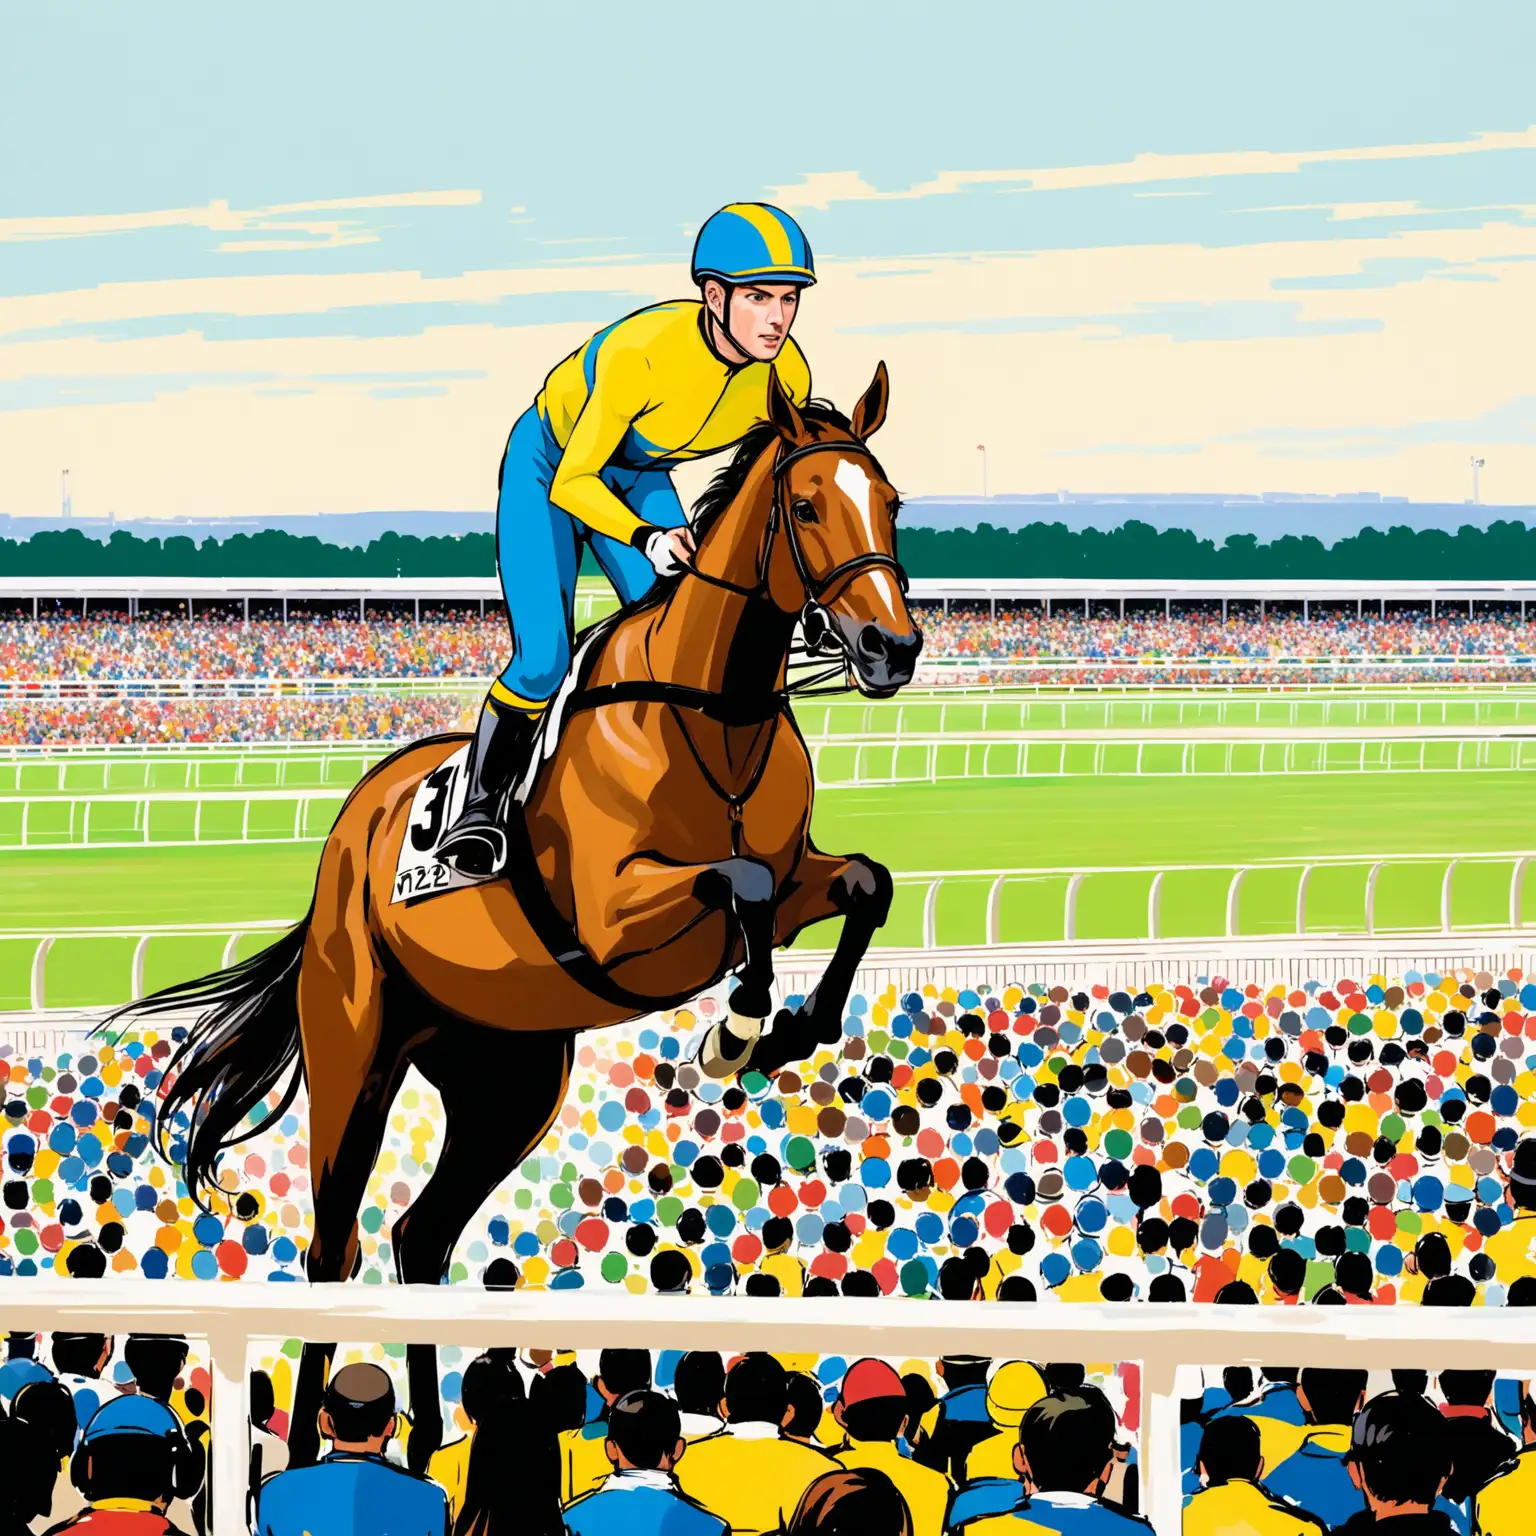 Swedish Jockey in Vibrant Yellow and Blue Sportswear at Modern Art Racecourse